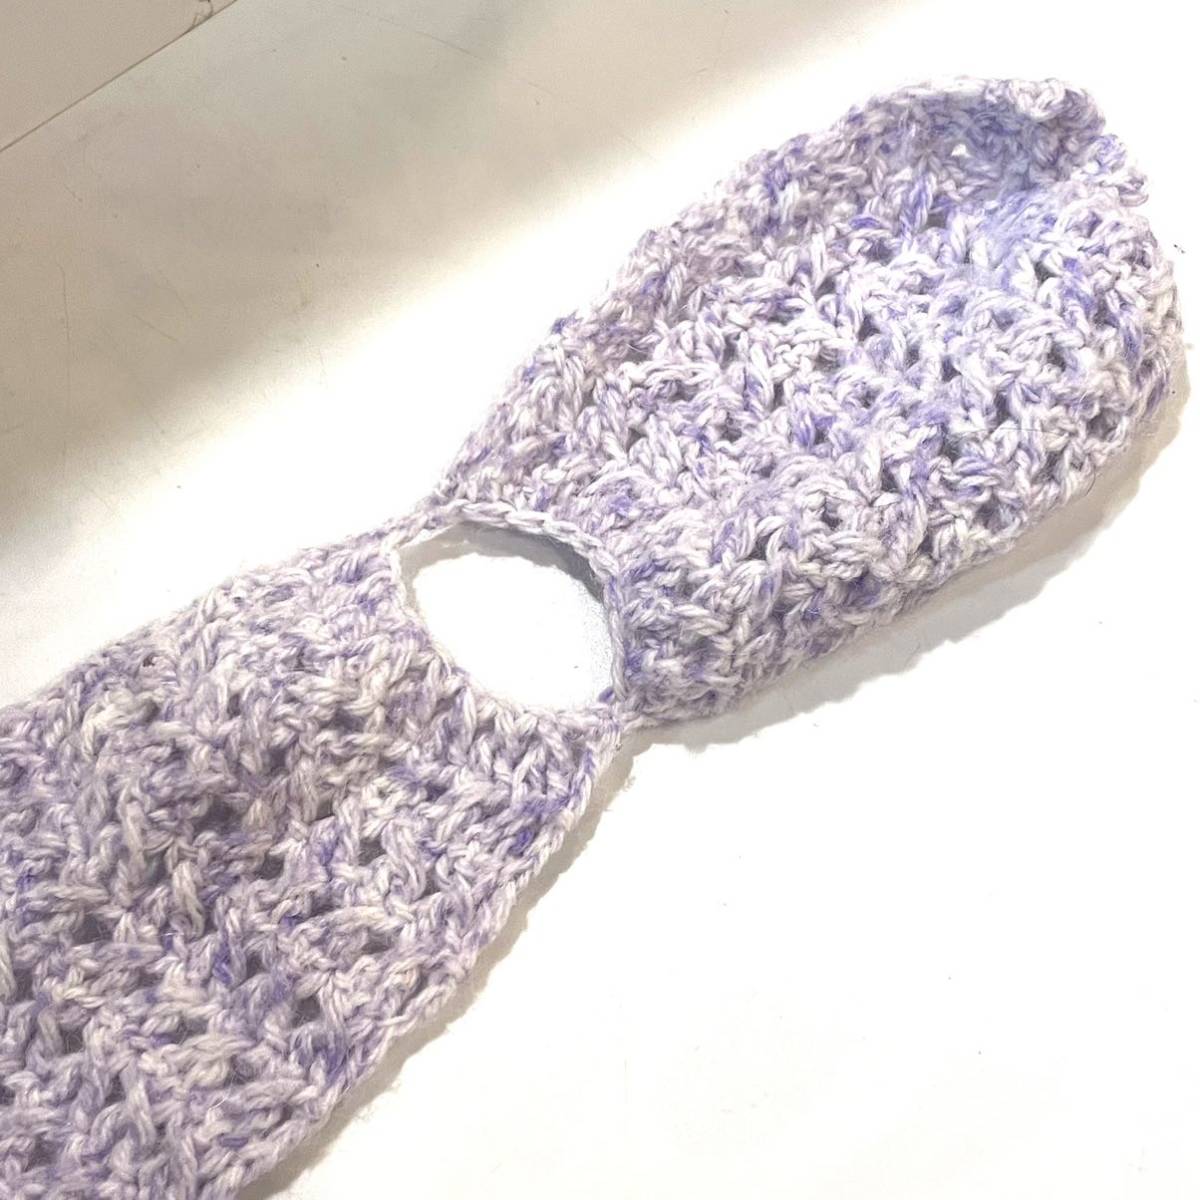  tippet Mini muffler purple flower knitted 24022110